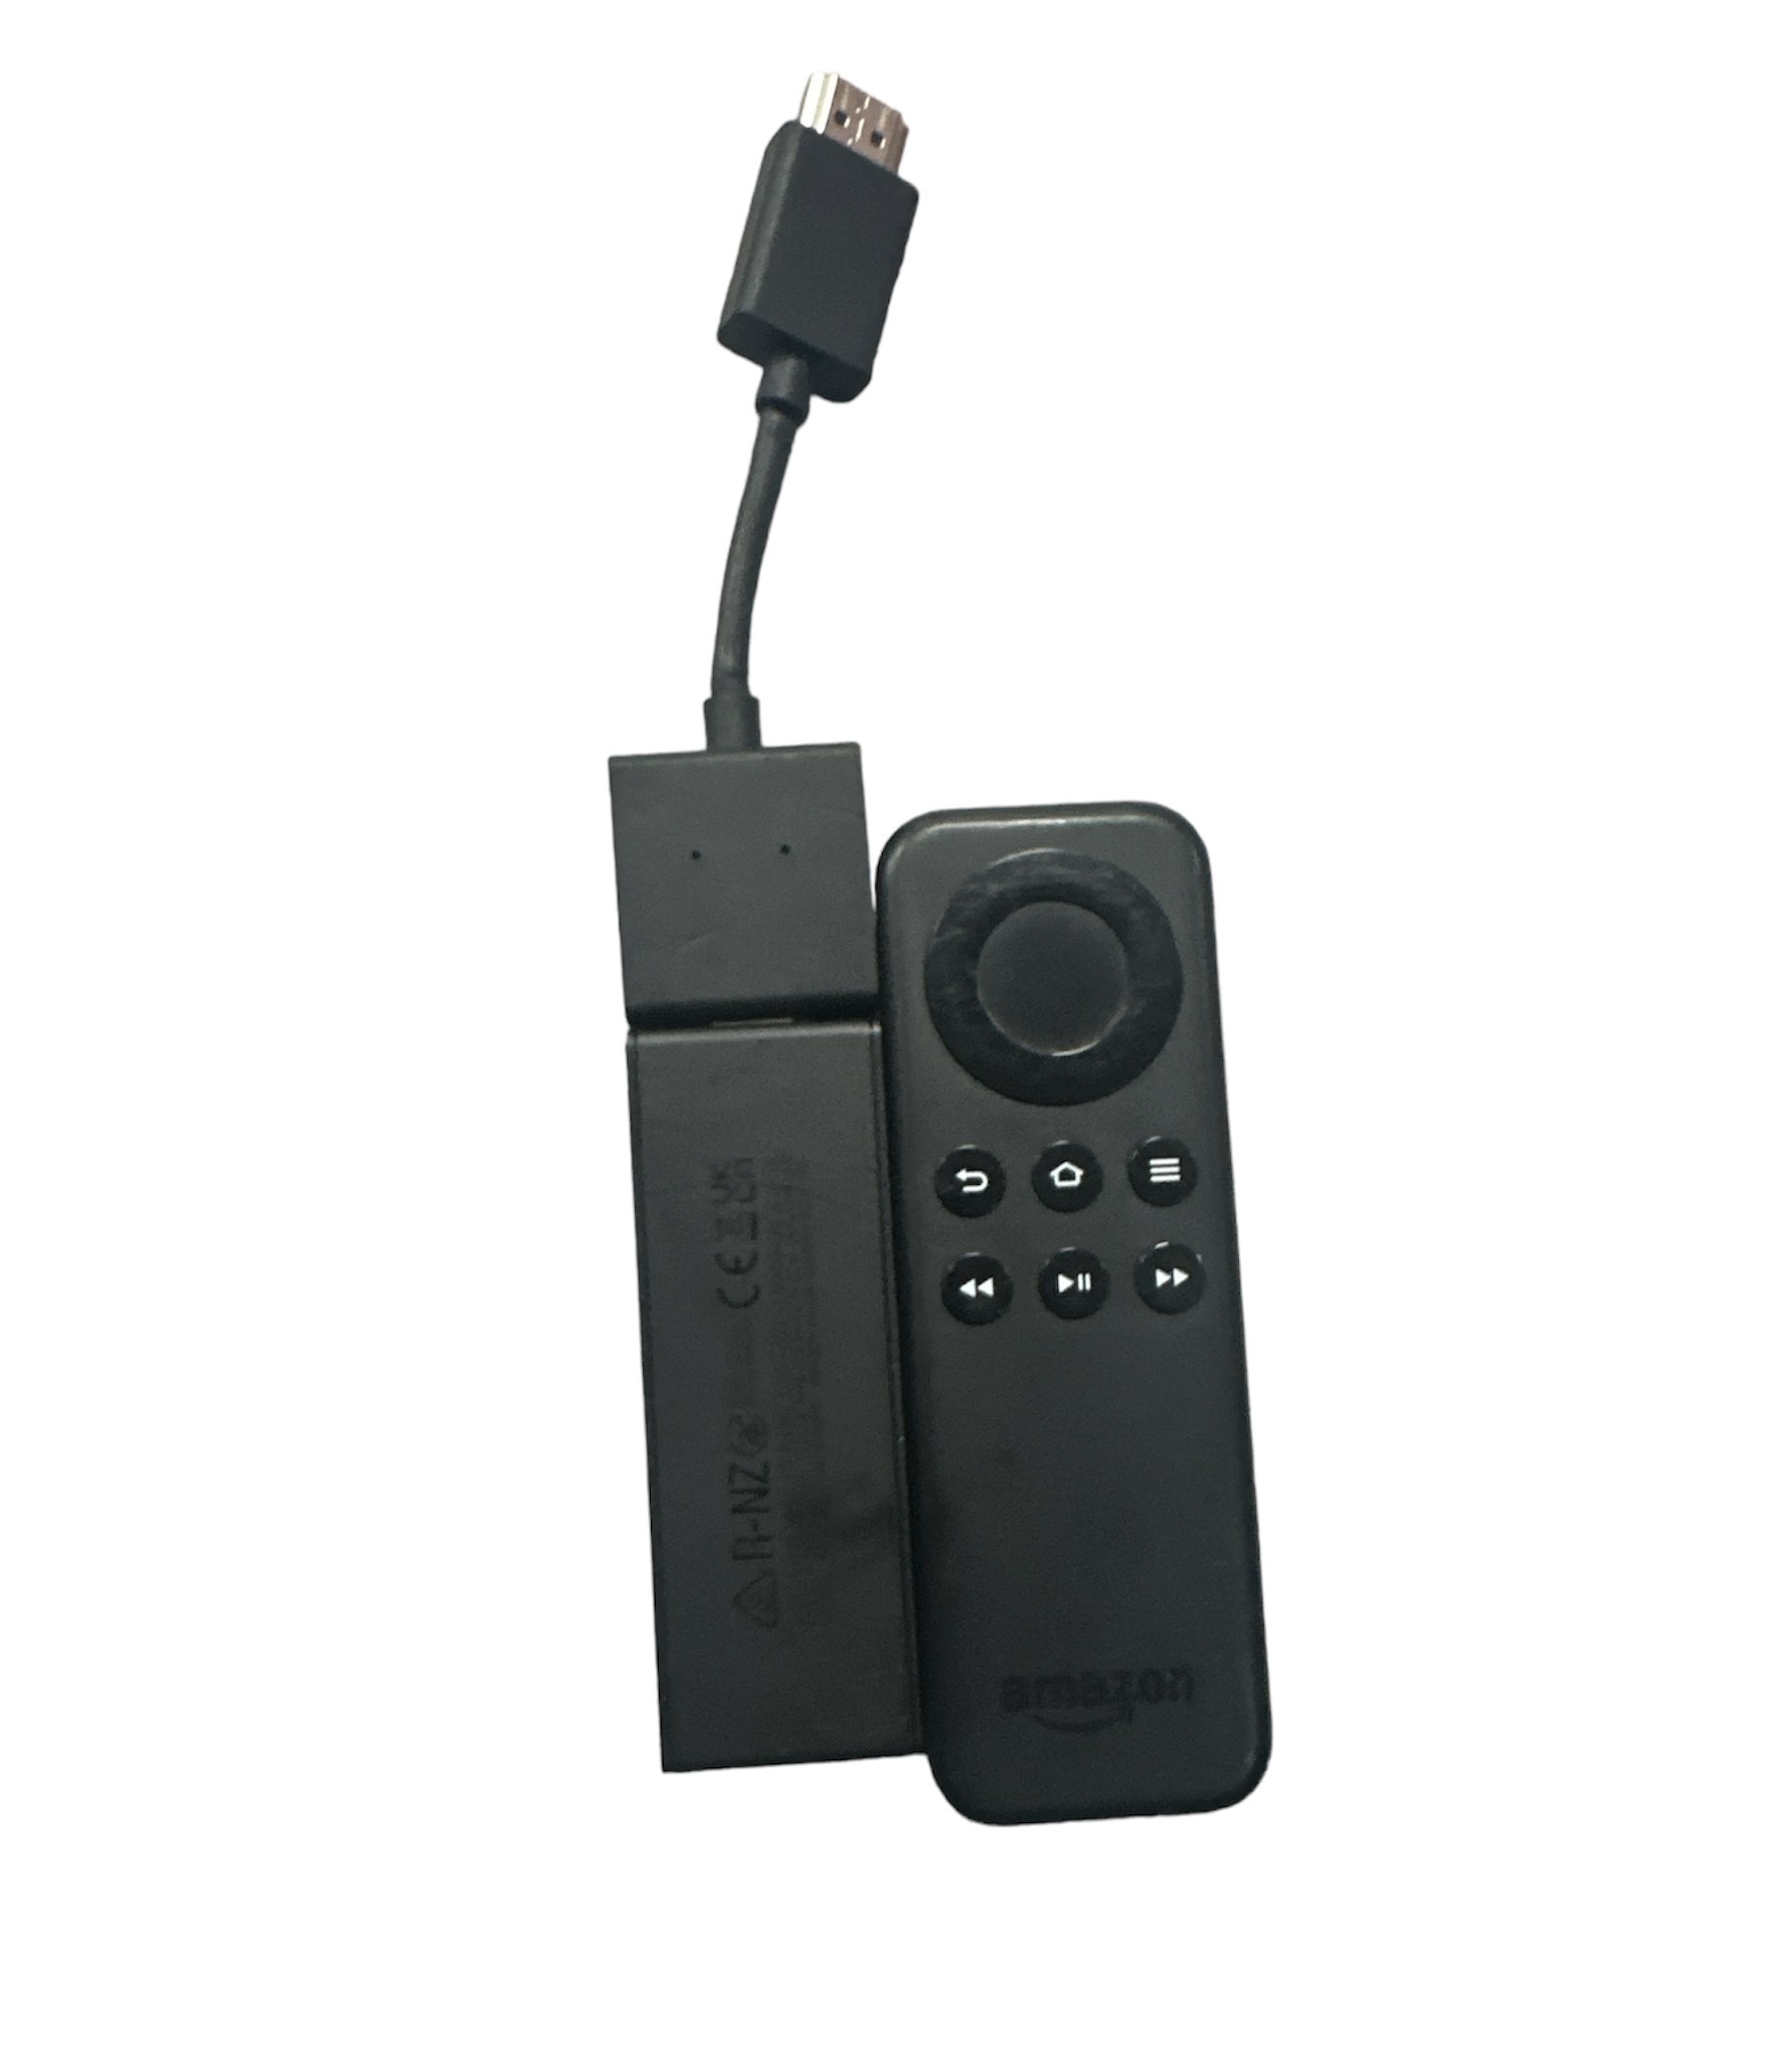 Amazon Firestick - S3L64N - Remote, No Plug